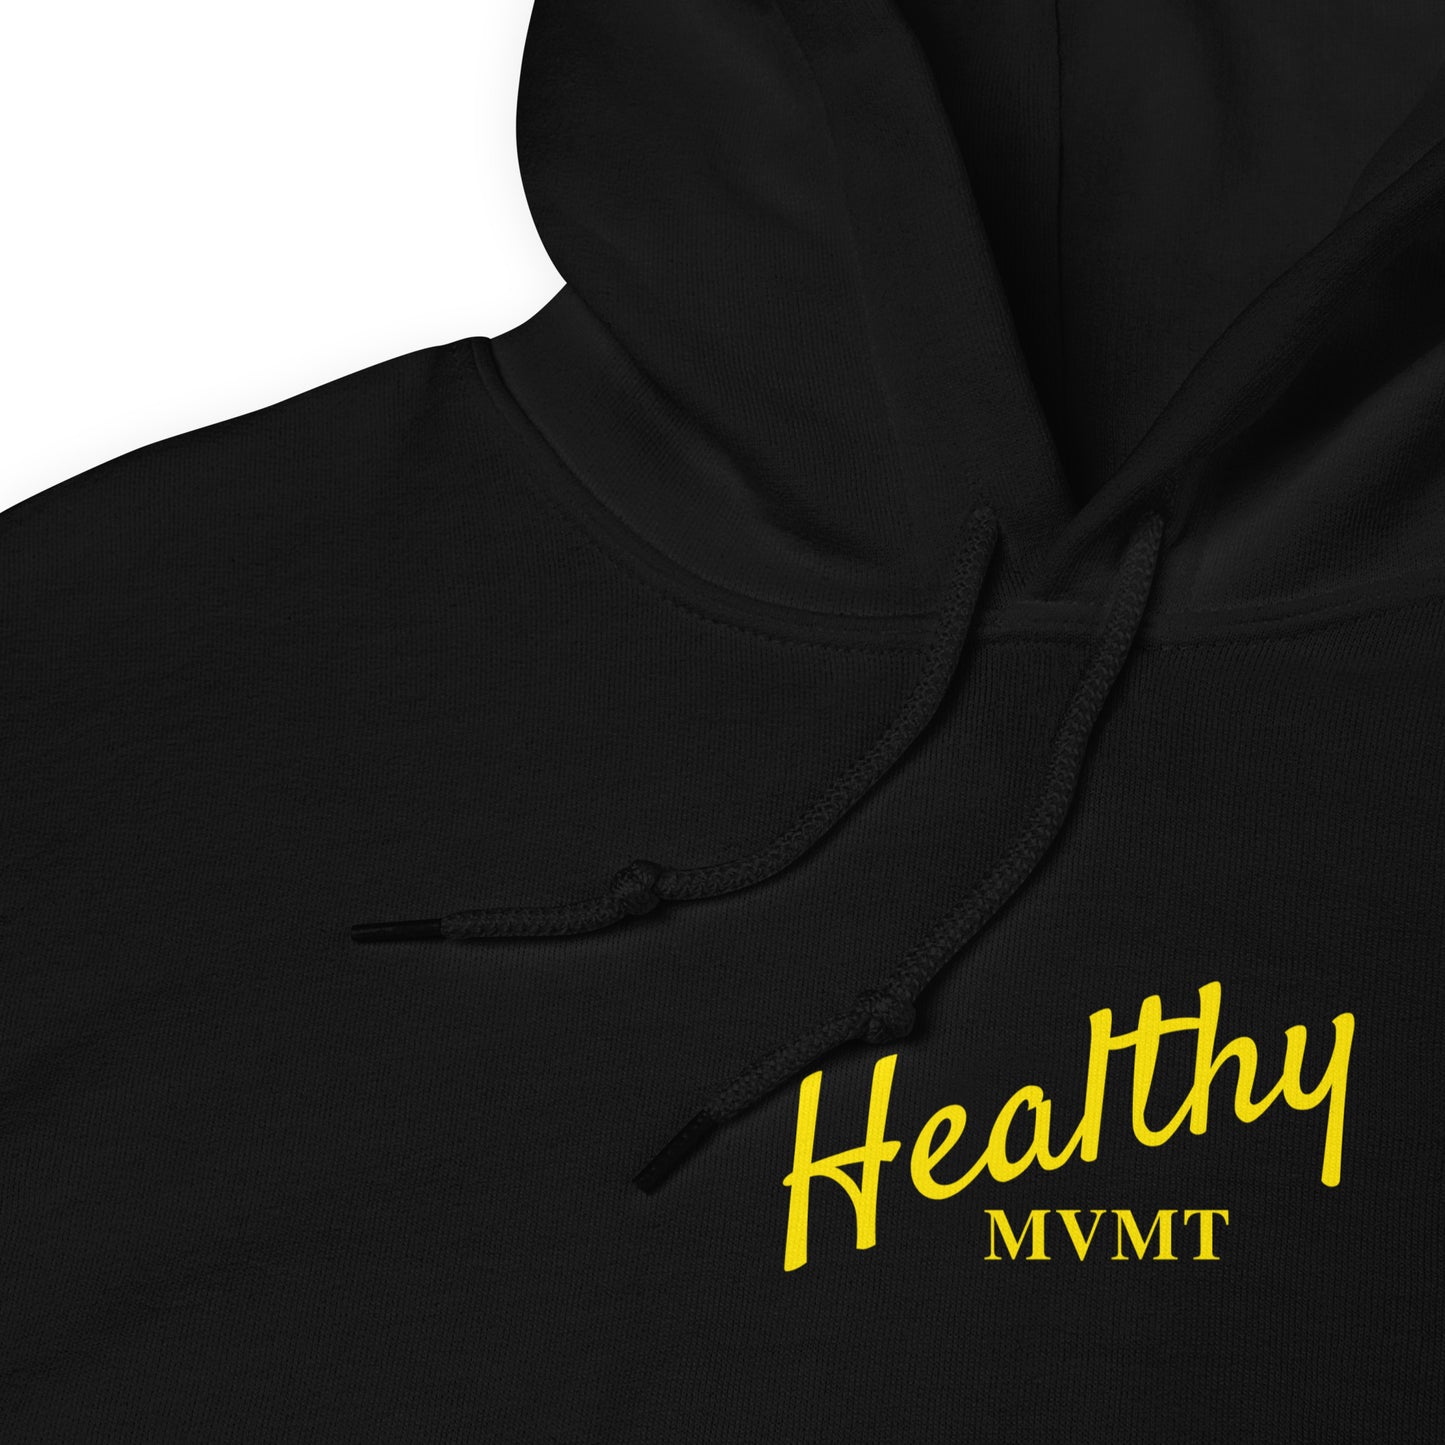 HealthyMVMT (Black) | Women's Hoodie by HealthyMVMT